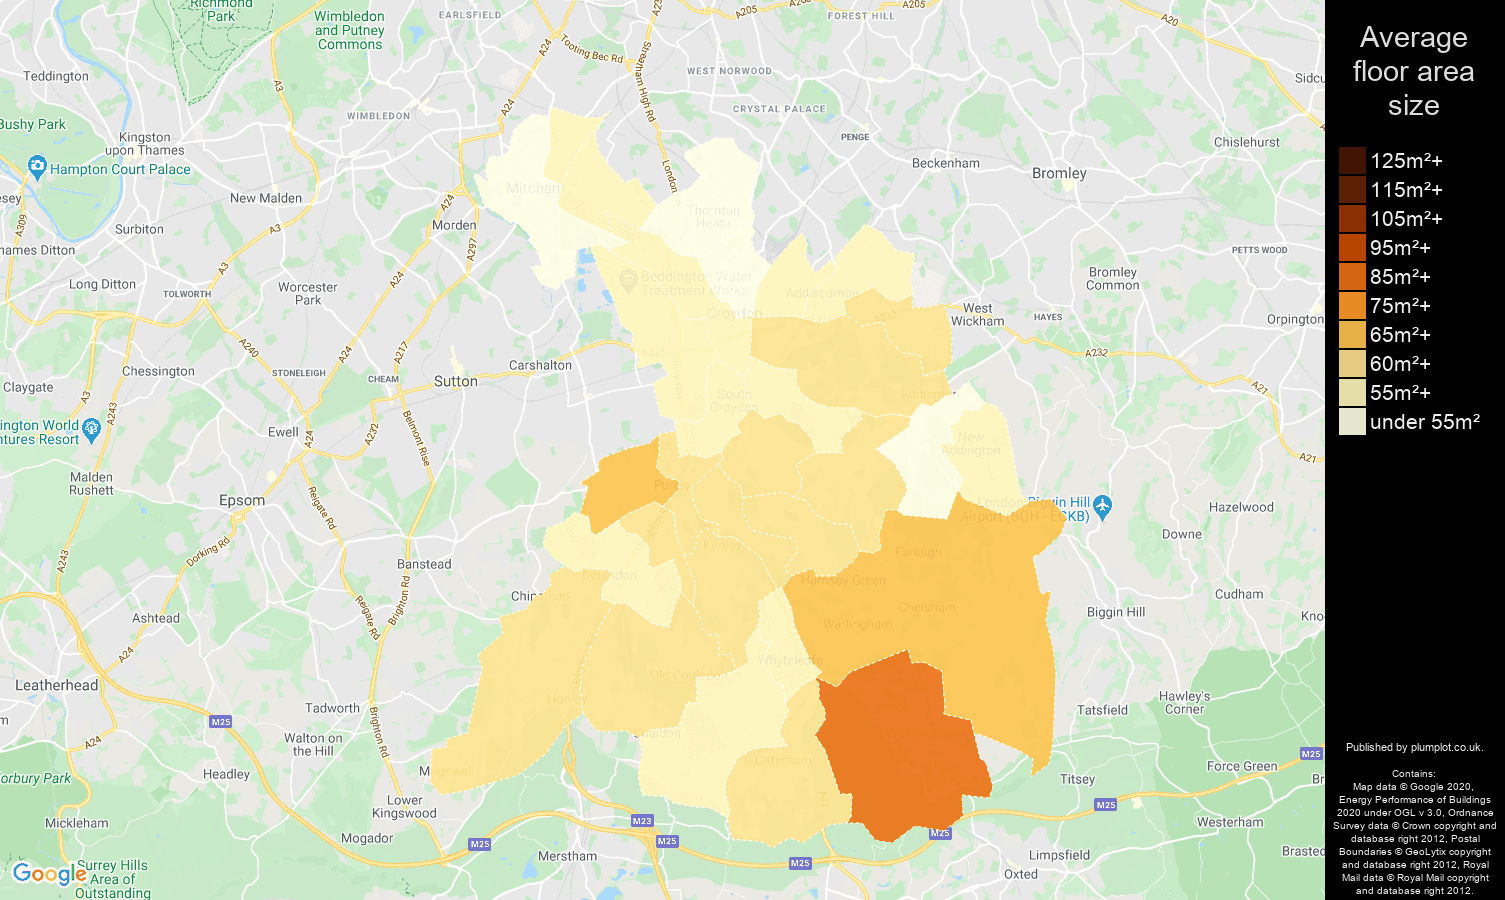 Croydon map of average floor area size of flats